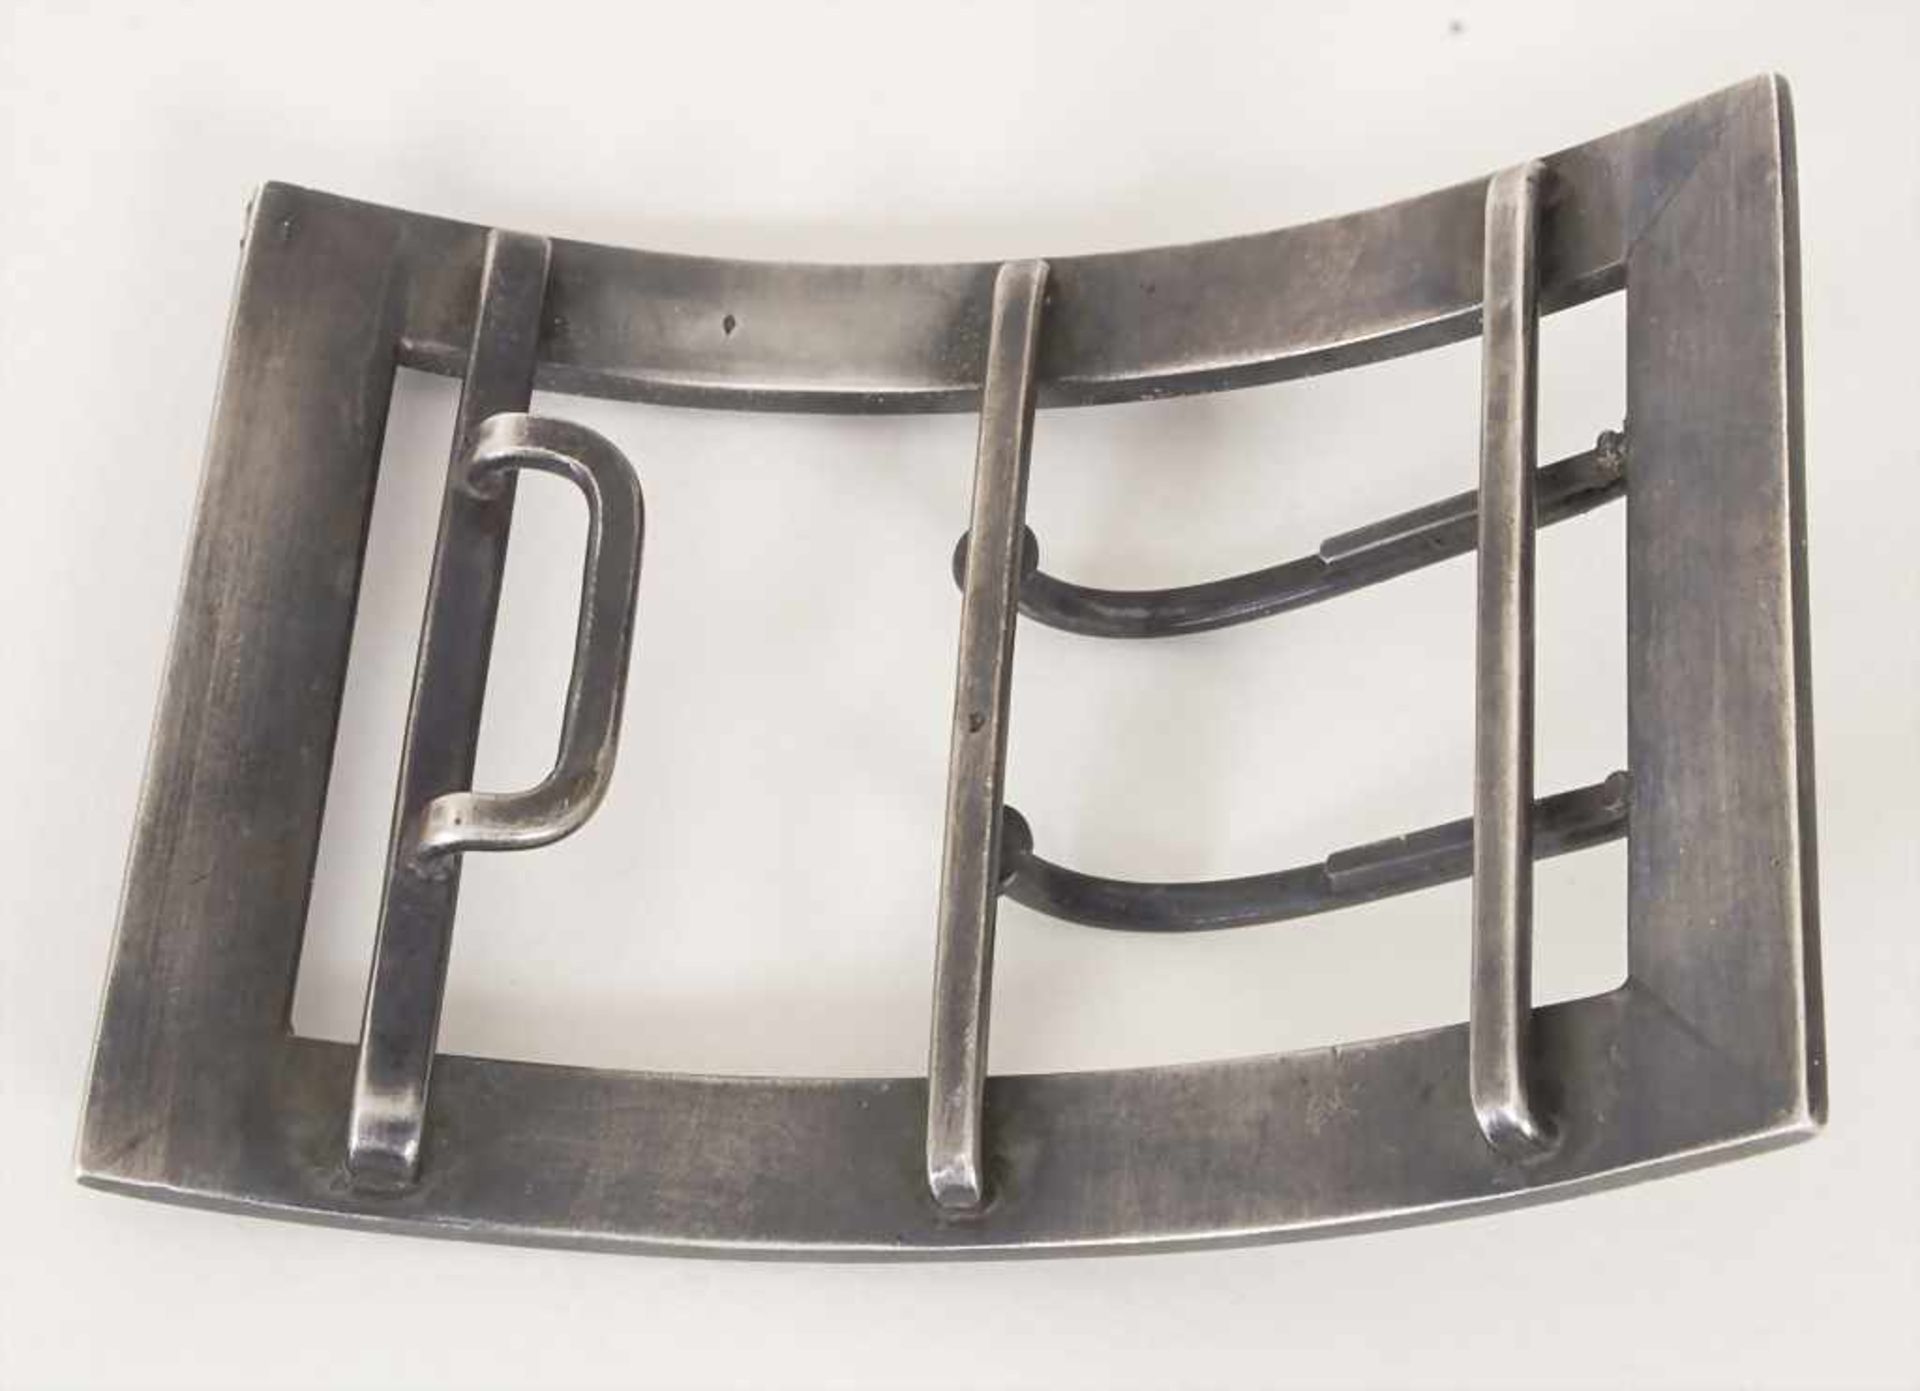 Silber Gürtelschließe / A silver belt buckle, Frankreich, um 1860 - Image 2 of 2